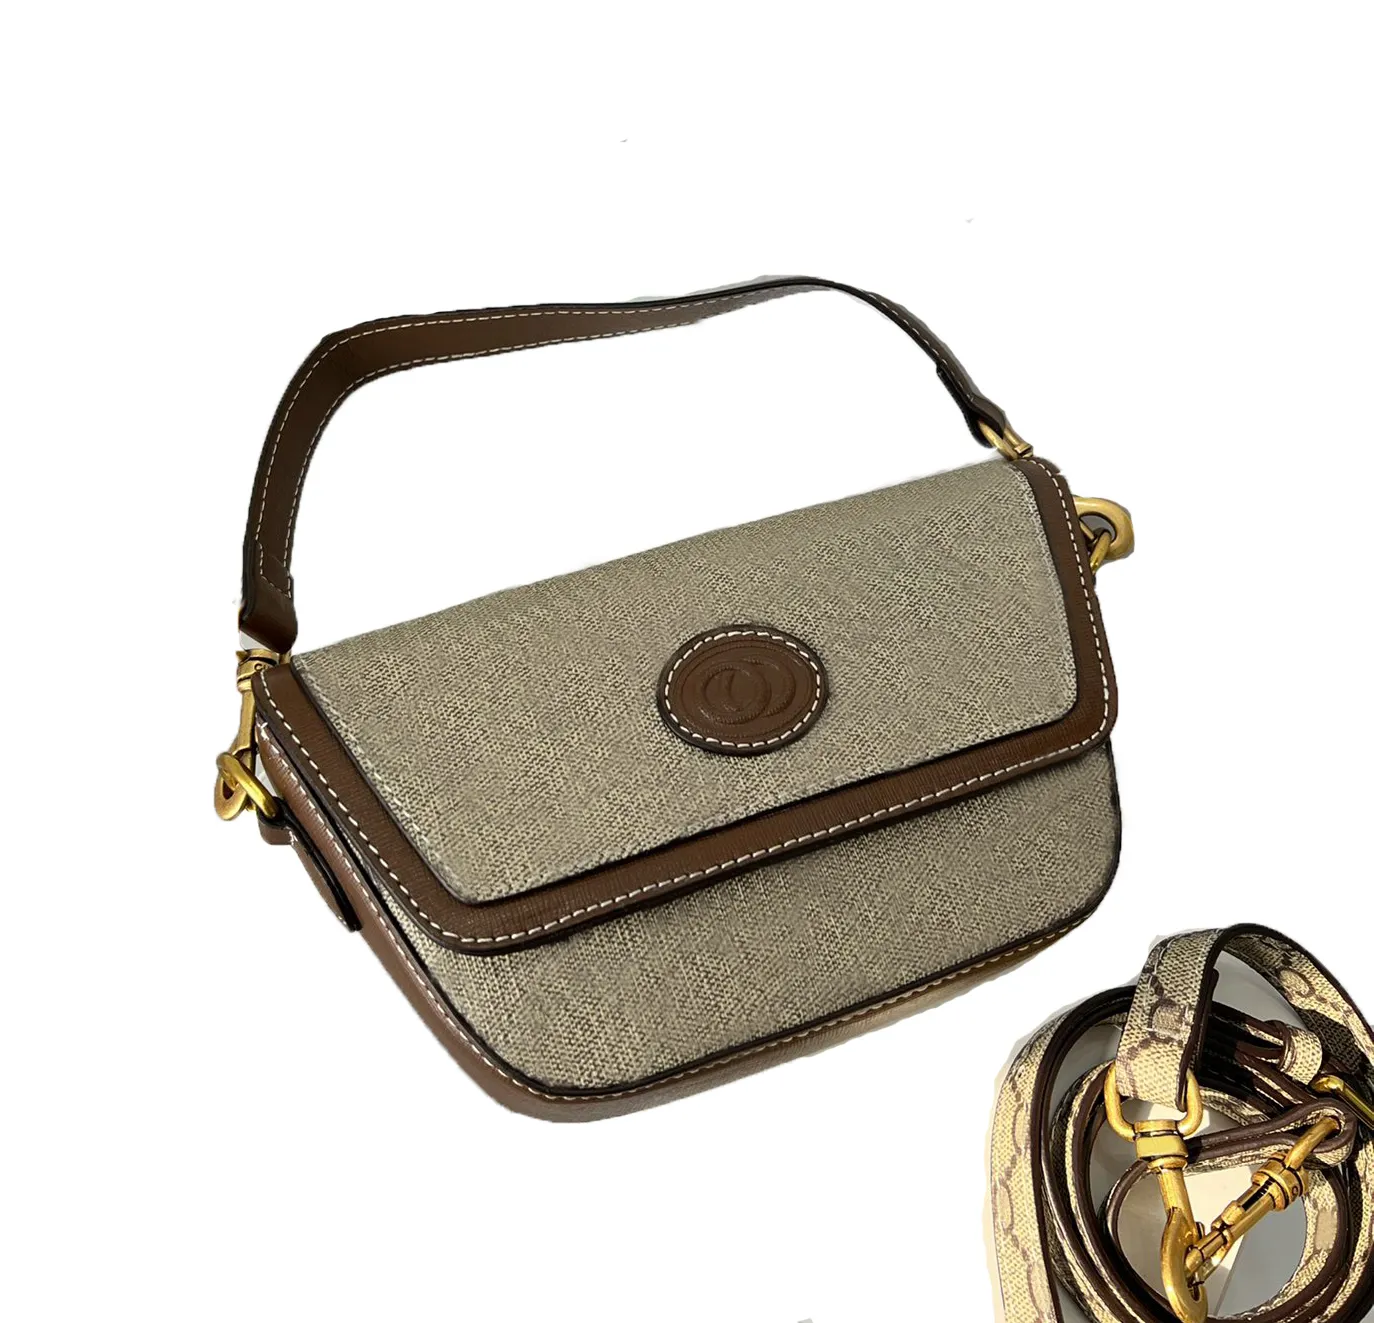 Designer tote bag luxury marmont handbags women shoulder bags Top-quality leather underarm pouch CNY mini totes purses ladies fashion clutch G-762A